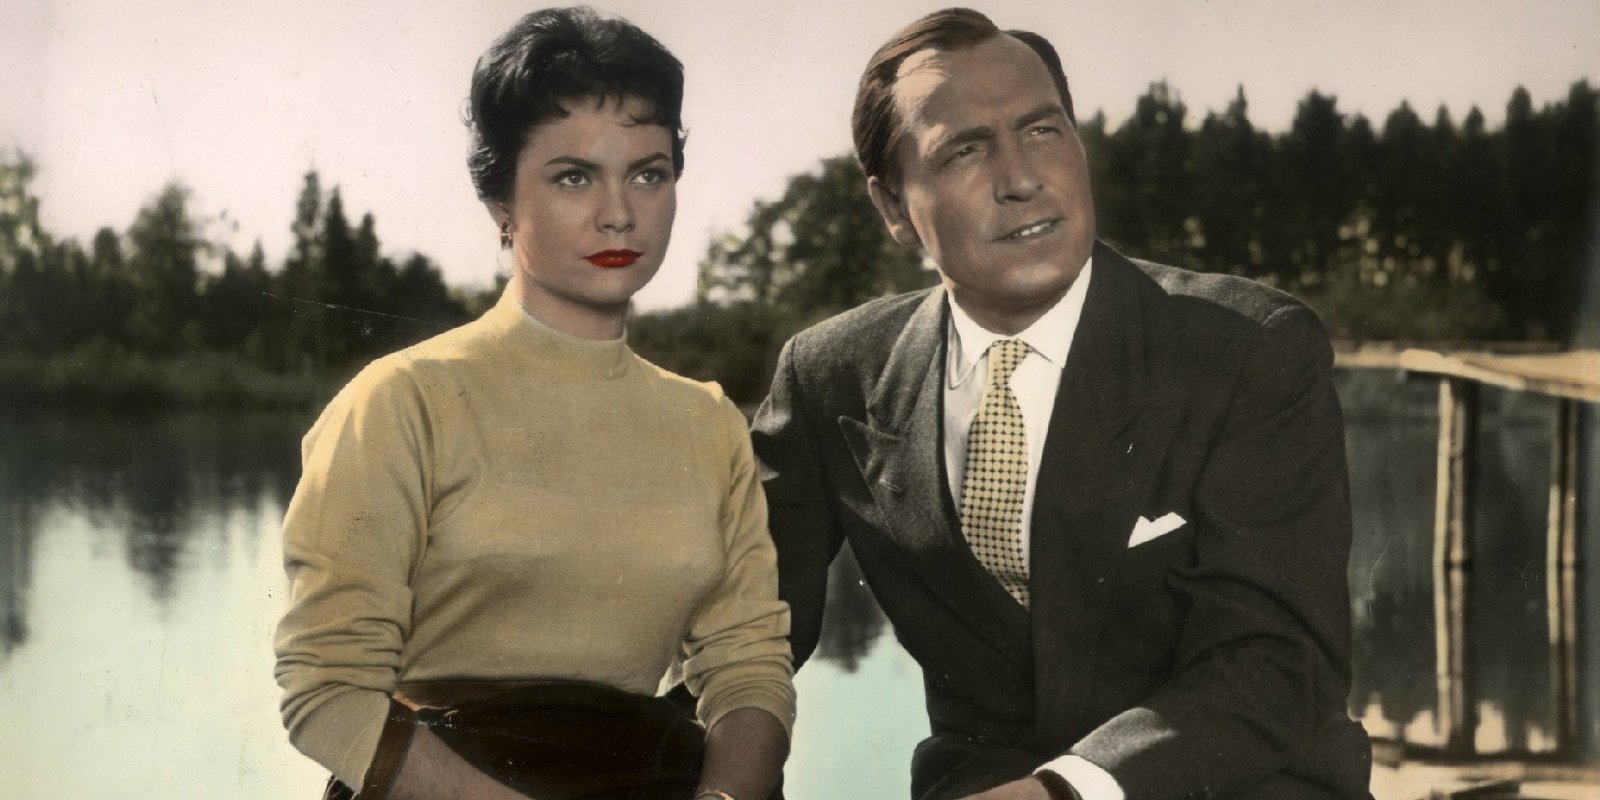 Das alte Försterhaus (1956) - IMDb